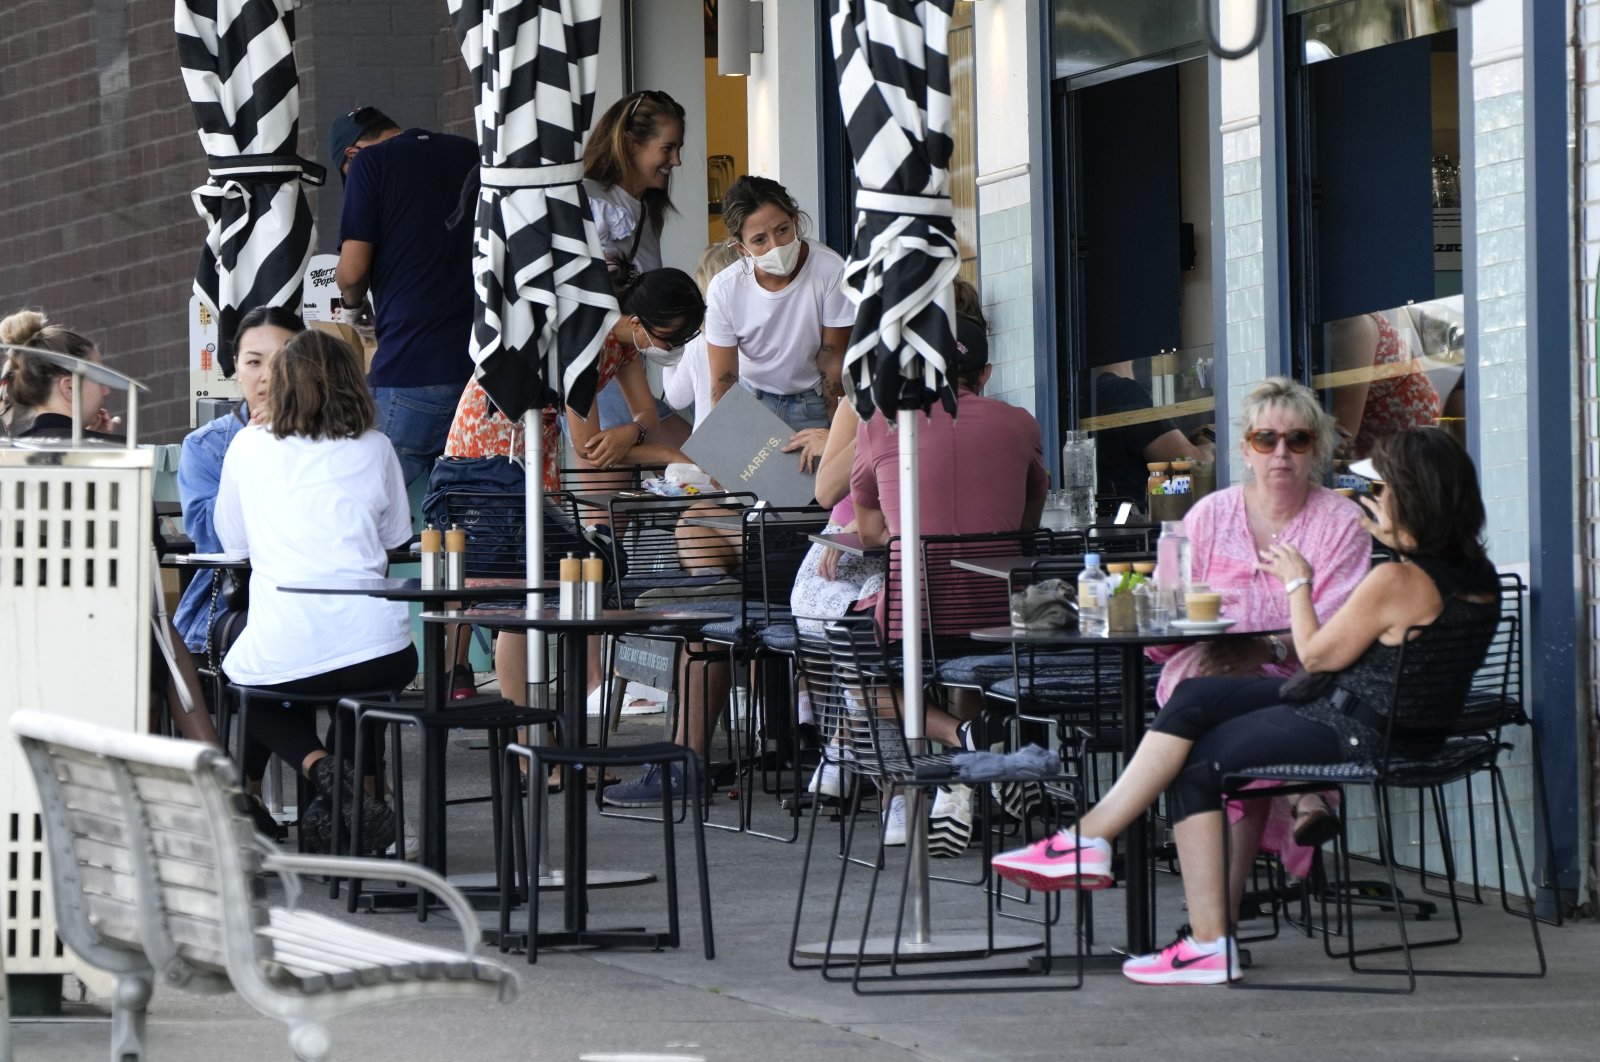 Customers sit outside a cafe at Bondi Beach in Sydney, Australia, Jan. 8, 2022. (AP Photo)